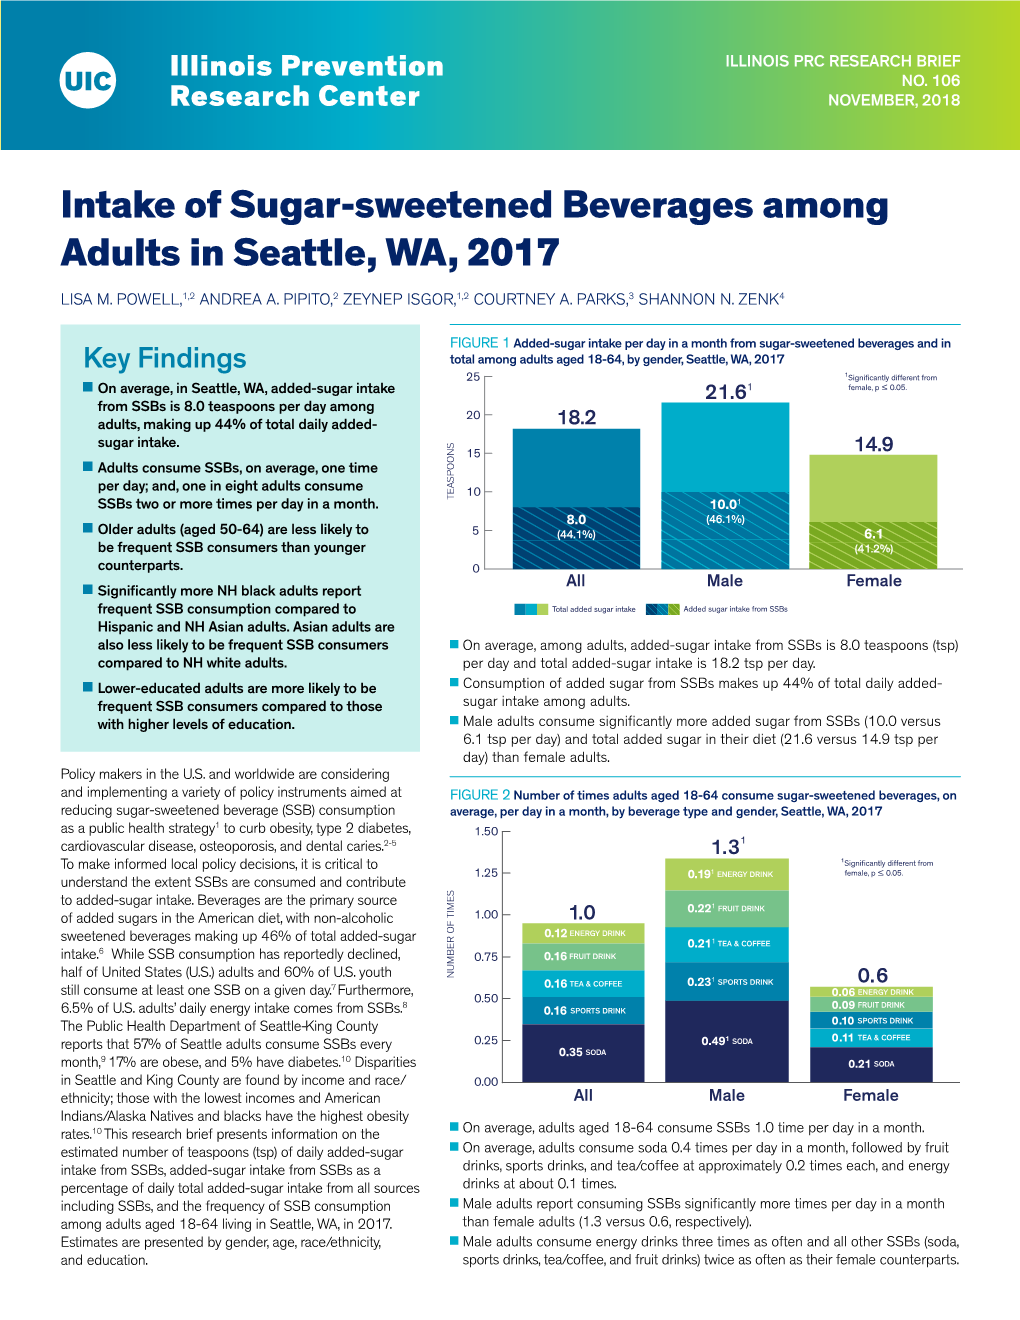 Intake of Sugar-Sweetened Beverages Among Adults in Seattle, WA, 2017 LISA M